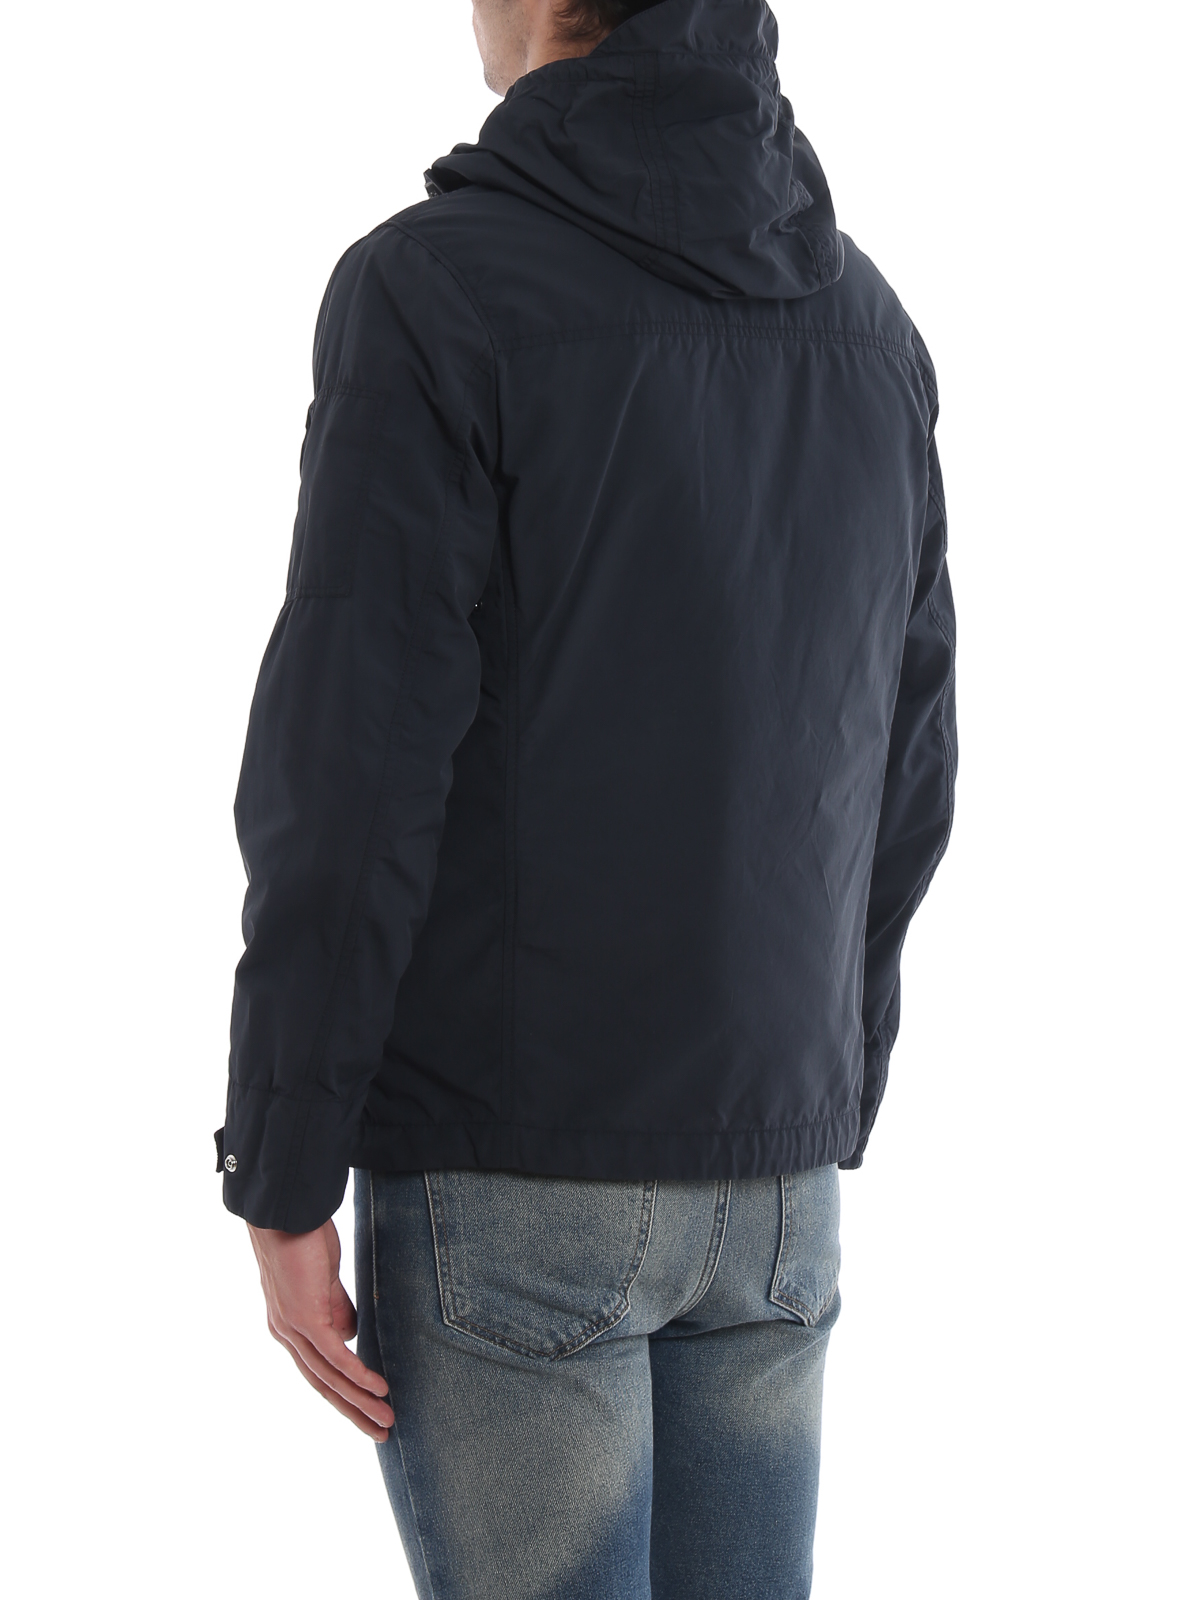 grens steeg Adverteerder Casual jackets Woolrich - Utility Rudder removable vest jacket -  WOCPS2792UT12083989